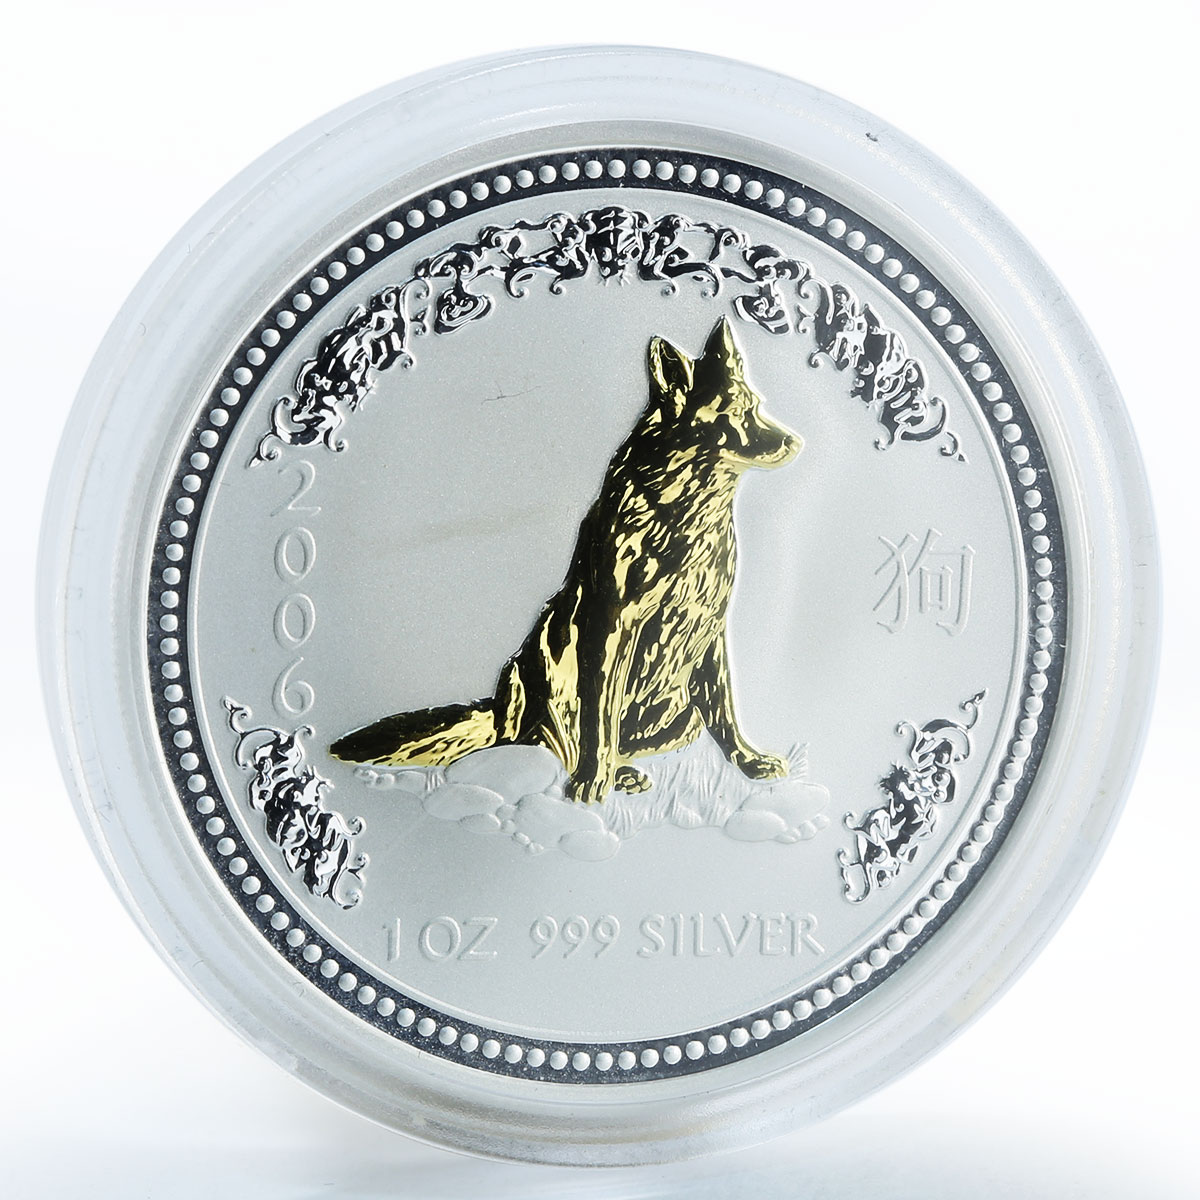 Australia 1 dollar Year of the Dog Lunar Series I 1 Oz Silver Gilded Coin 2006